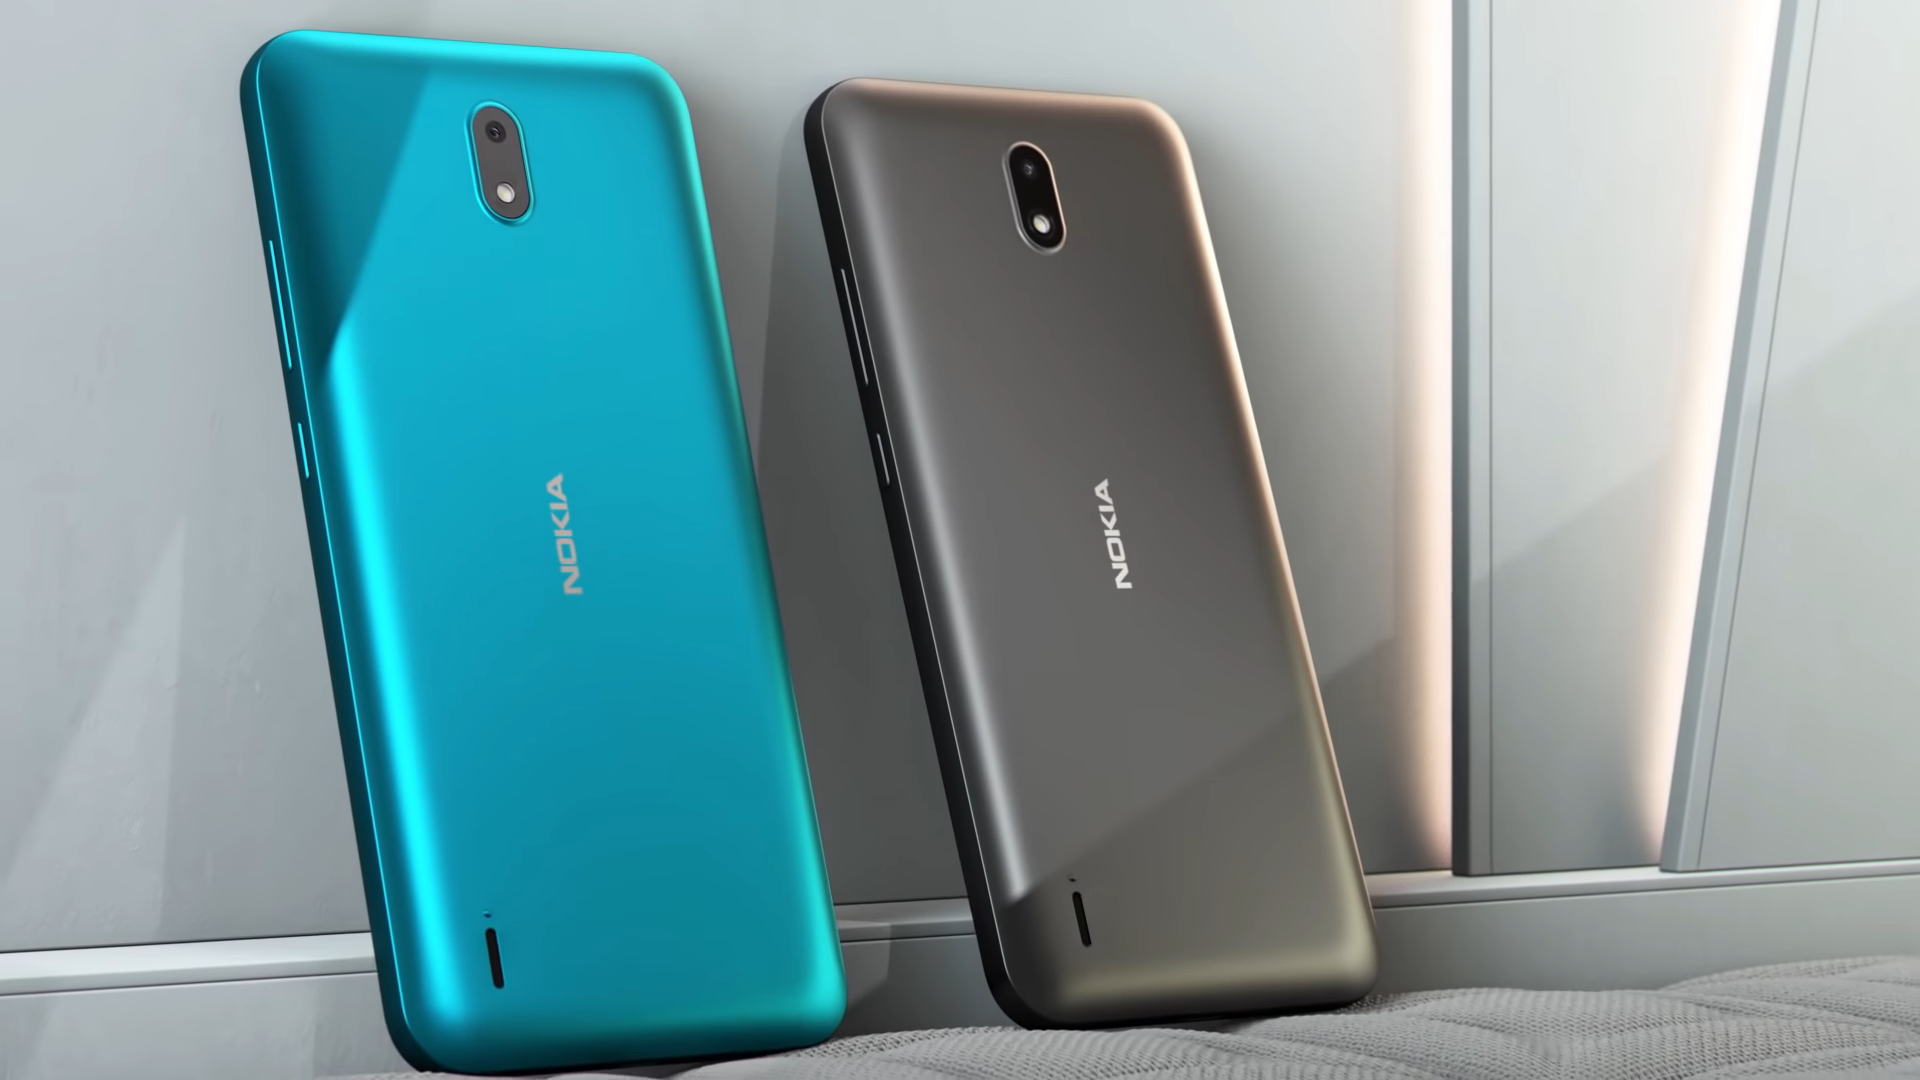 HMD Global tung intro giới thiệu smartphone Nokia C2 chạy Android Go mới